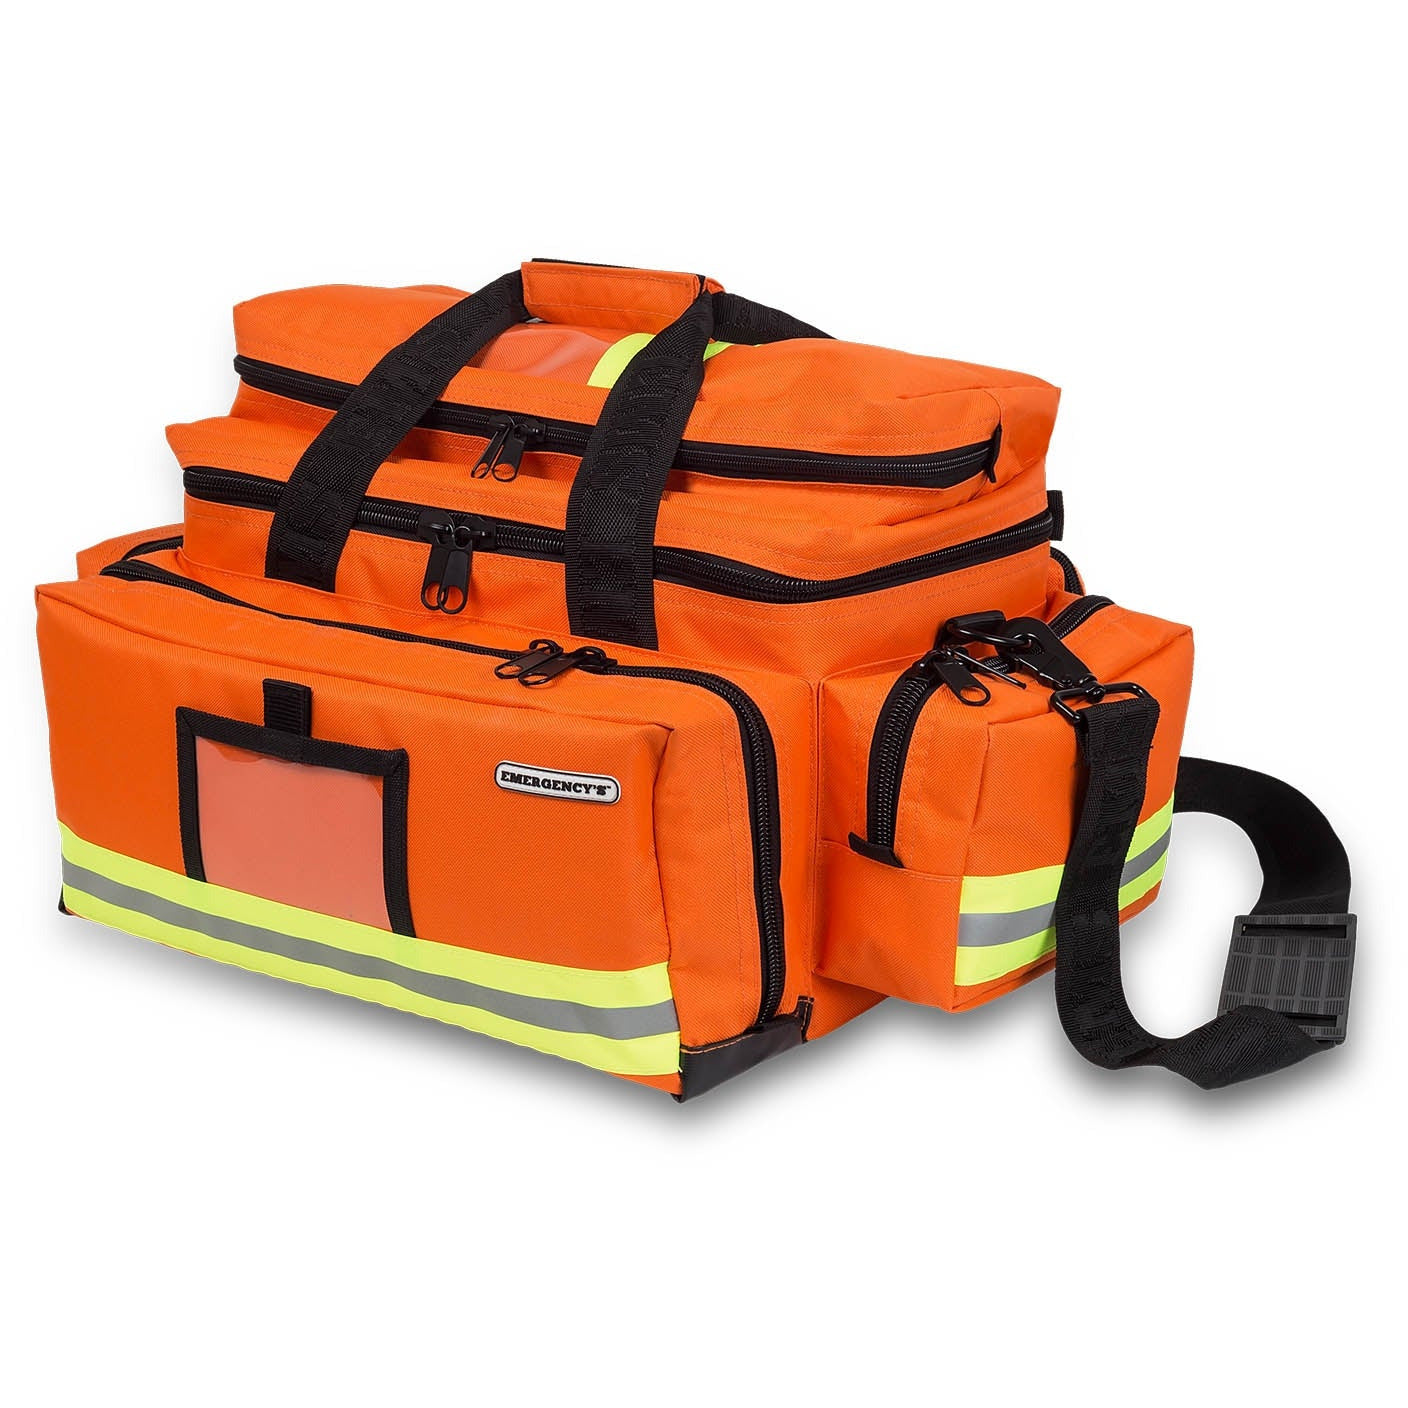 Elite Large Capacity Emergency Bag - Orange